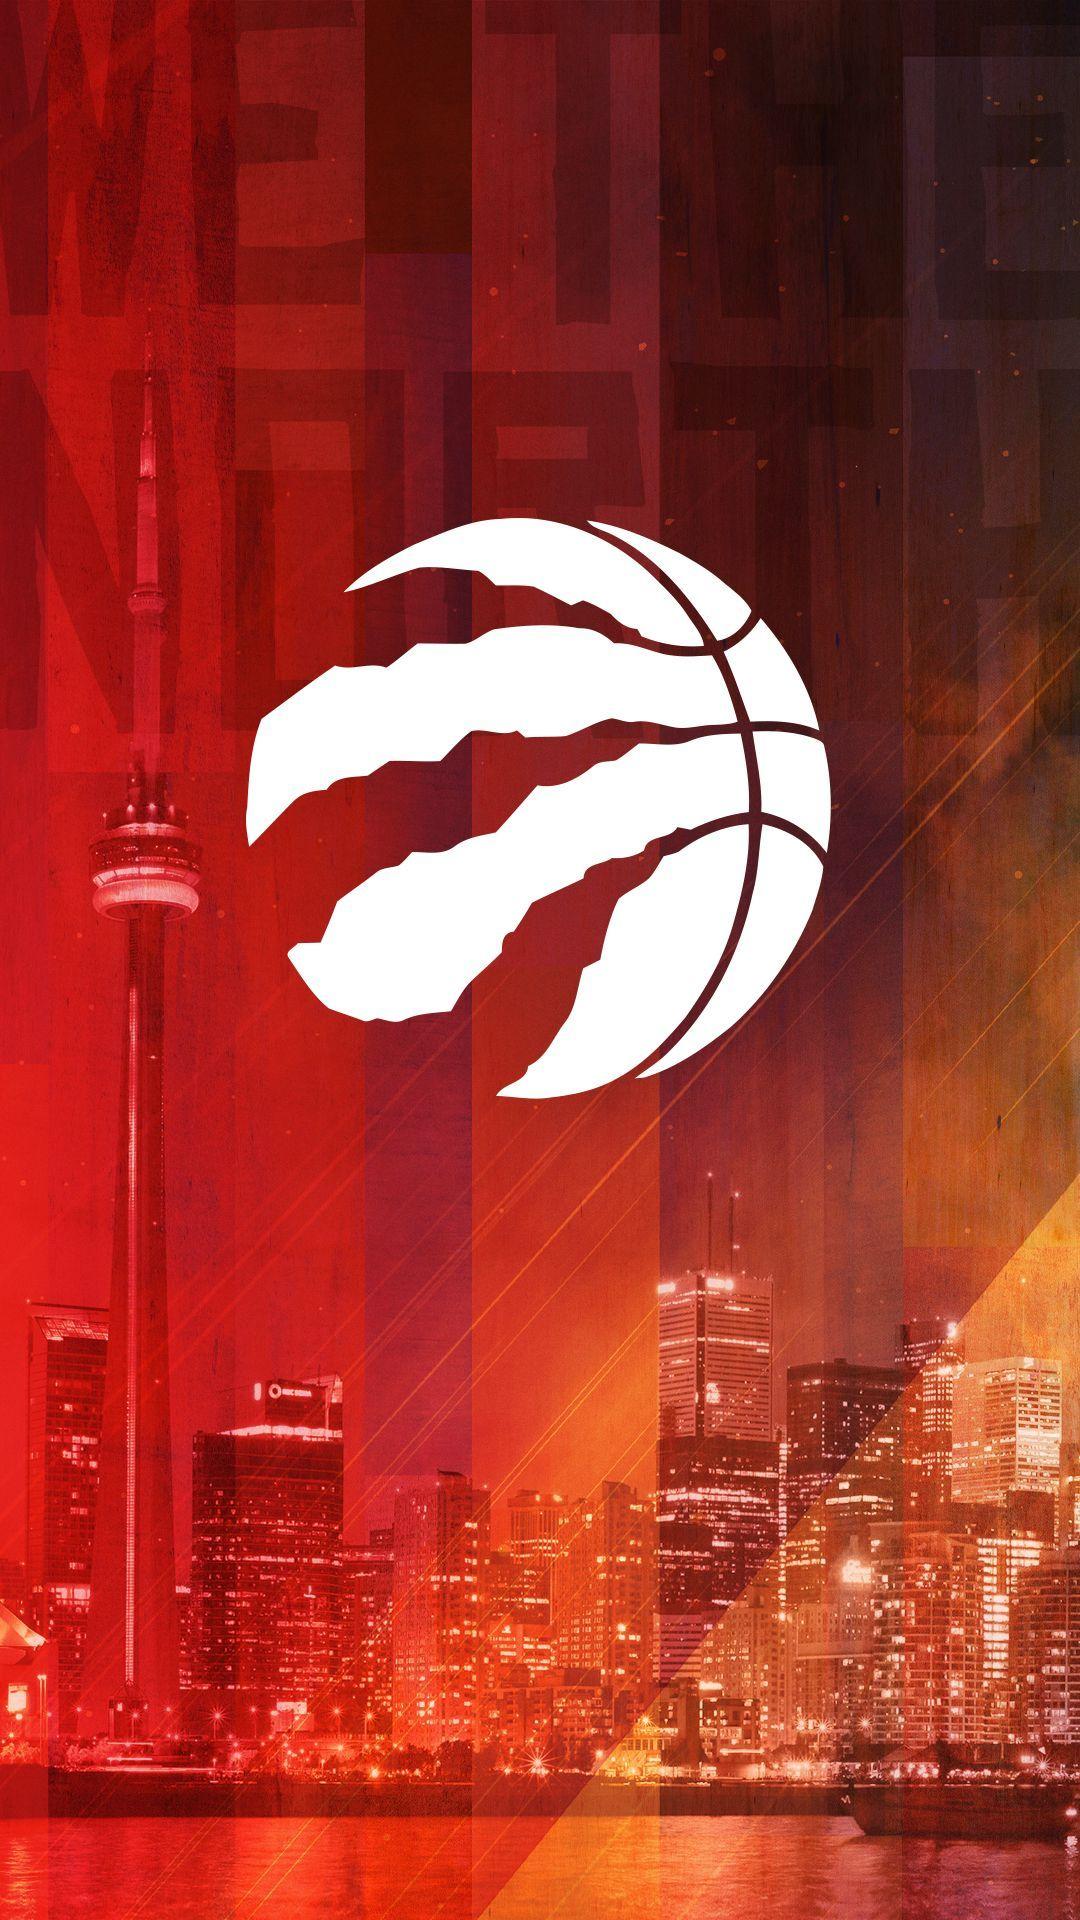 Toronto Raptors Wallpaper (New Logo). Raptors wallpaper, Toronto raptors basketball, Toronto raptors